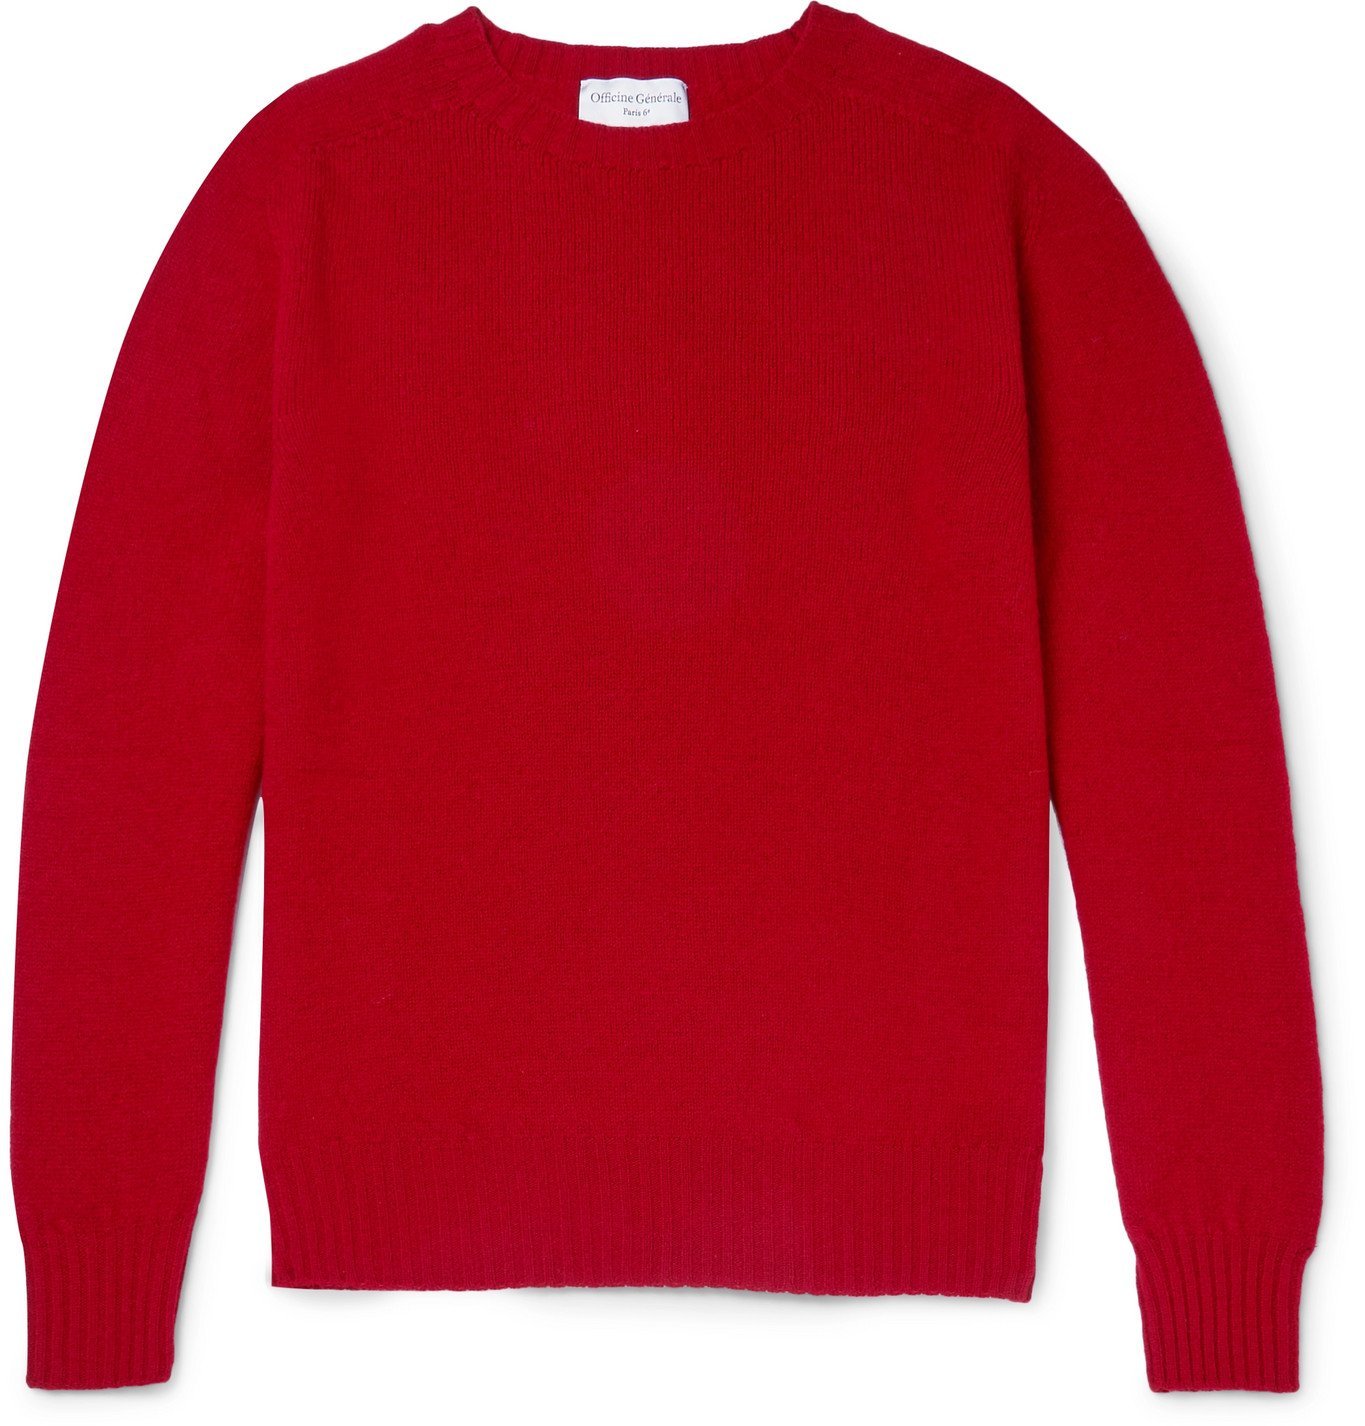 Officine Générale - Slim-Fit Virgin Wool Sweater - Red Officine Generale